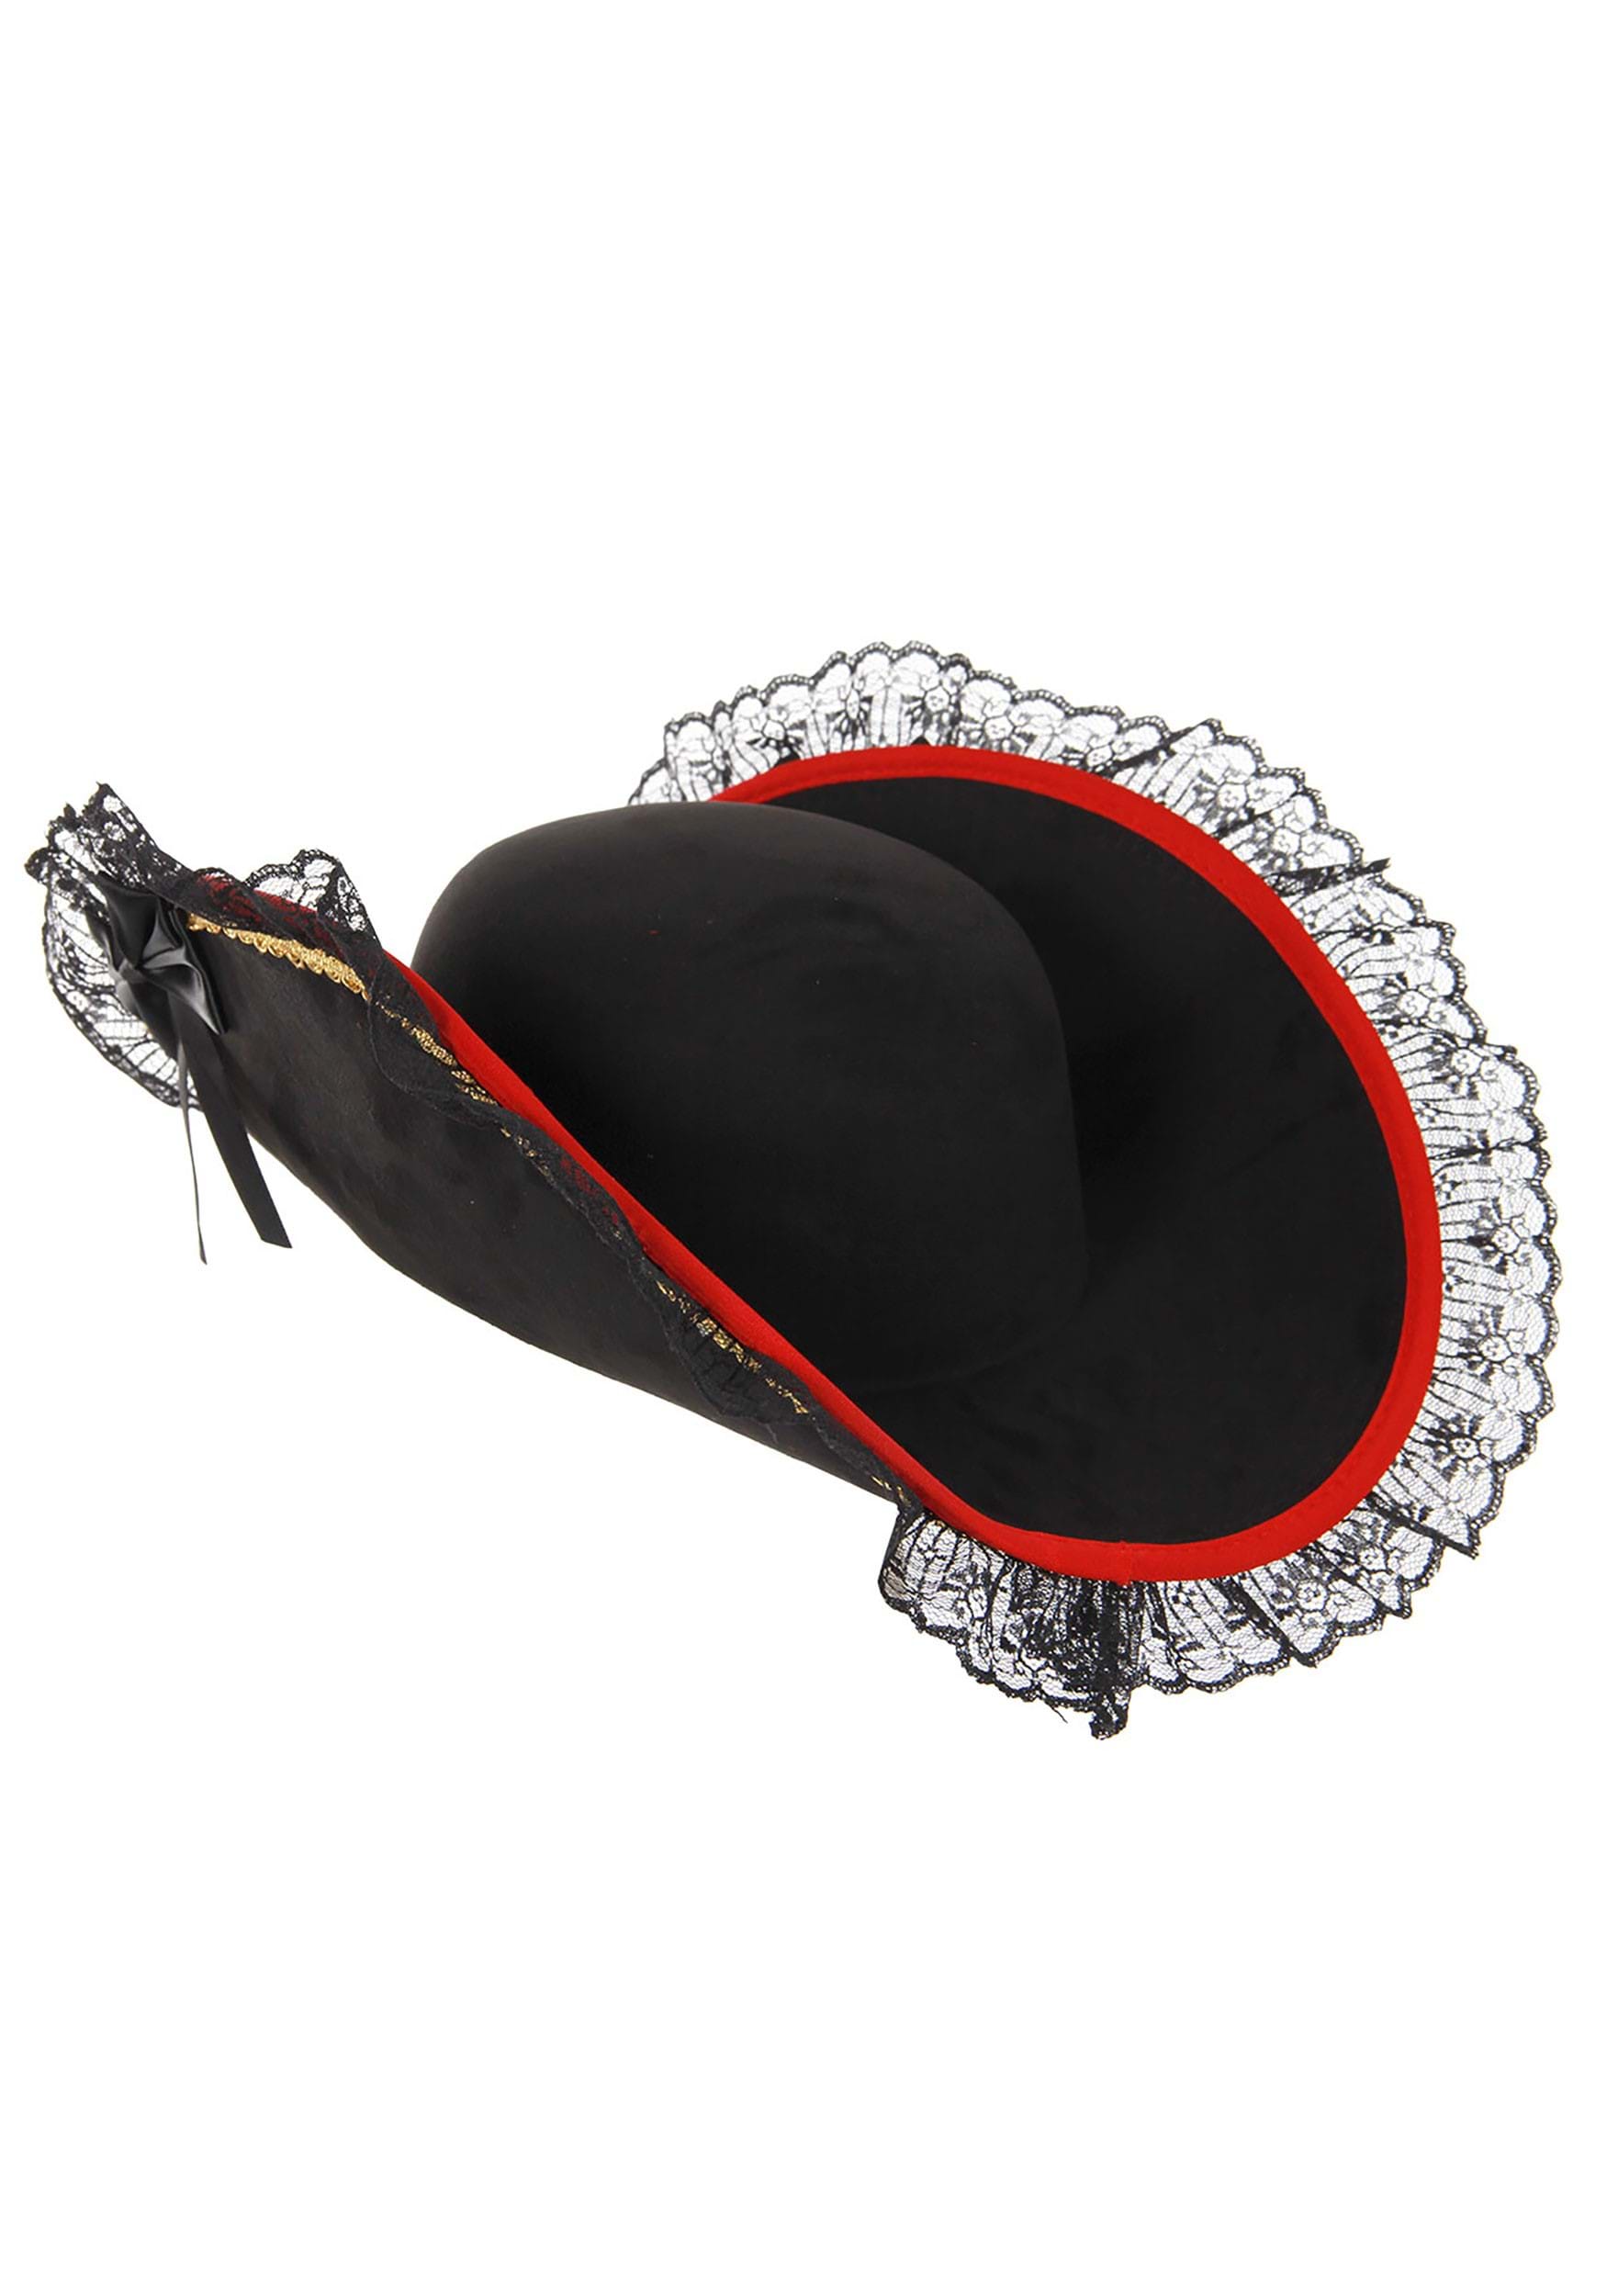 Lady Buccaneer Black Hat Accessory